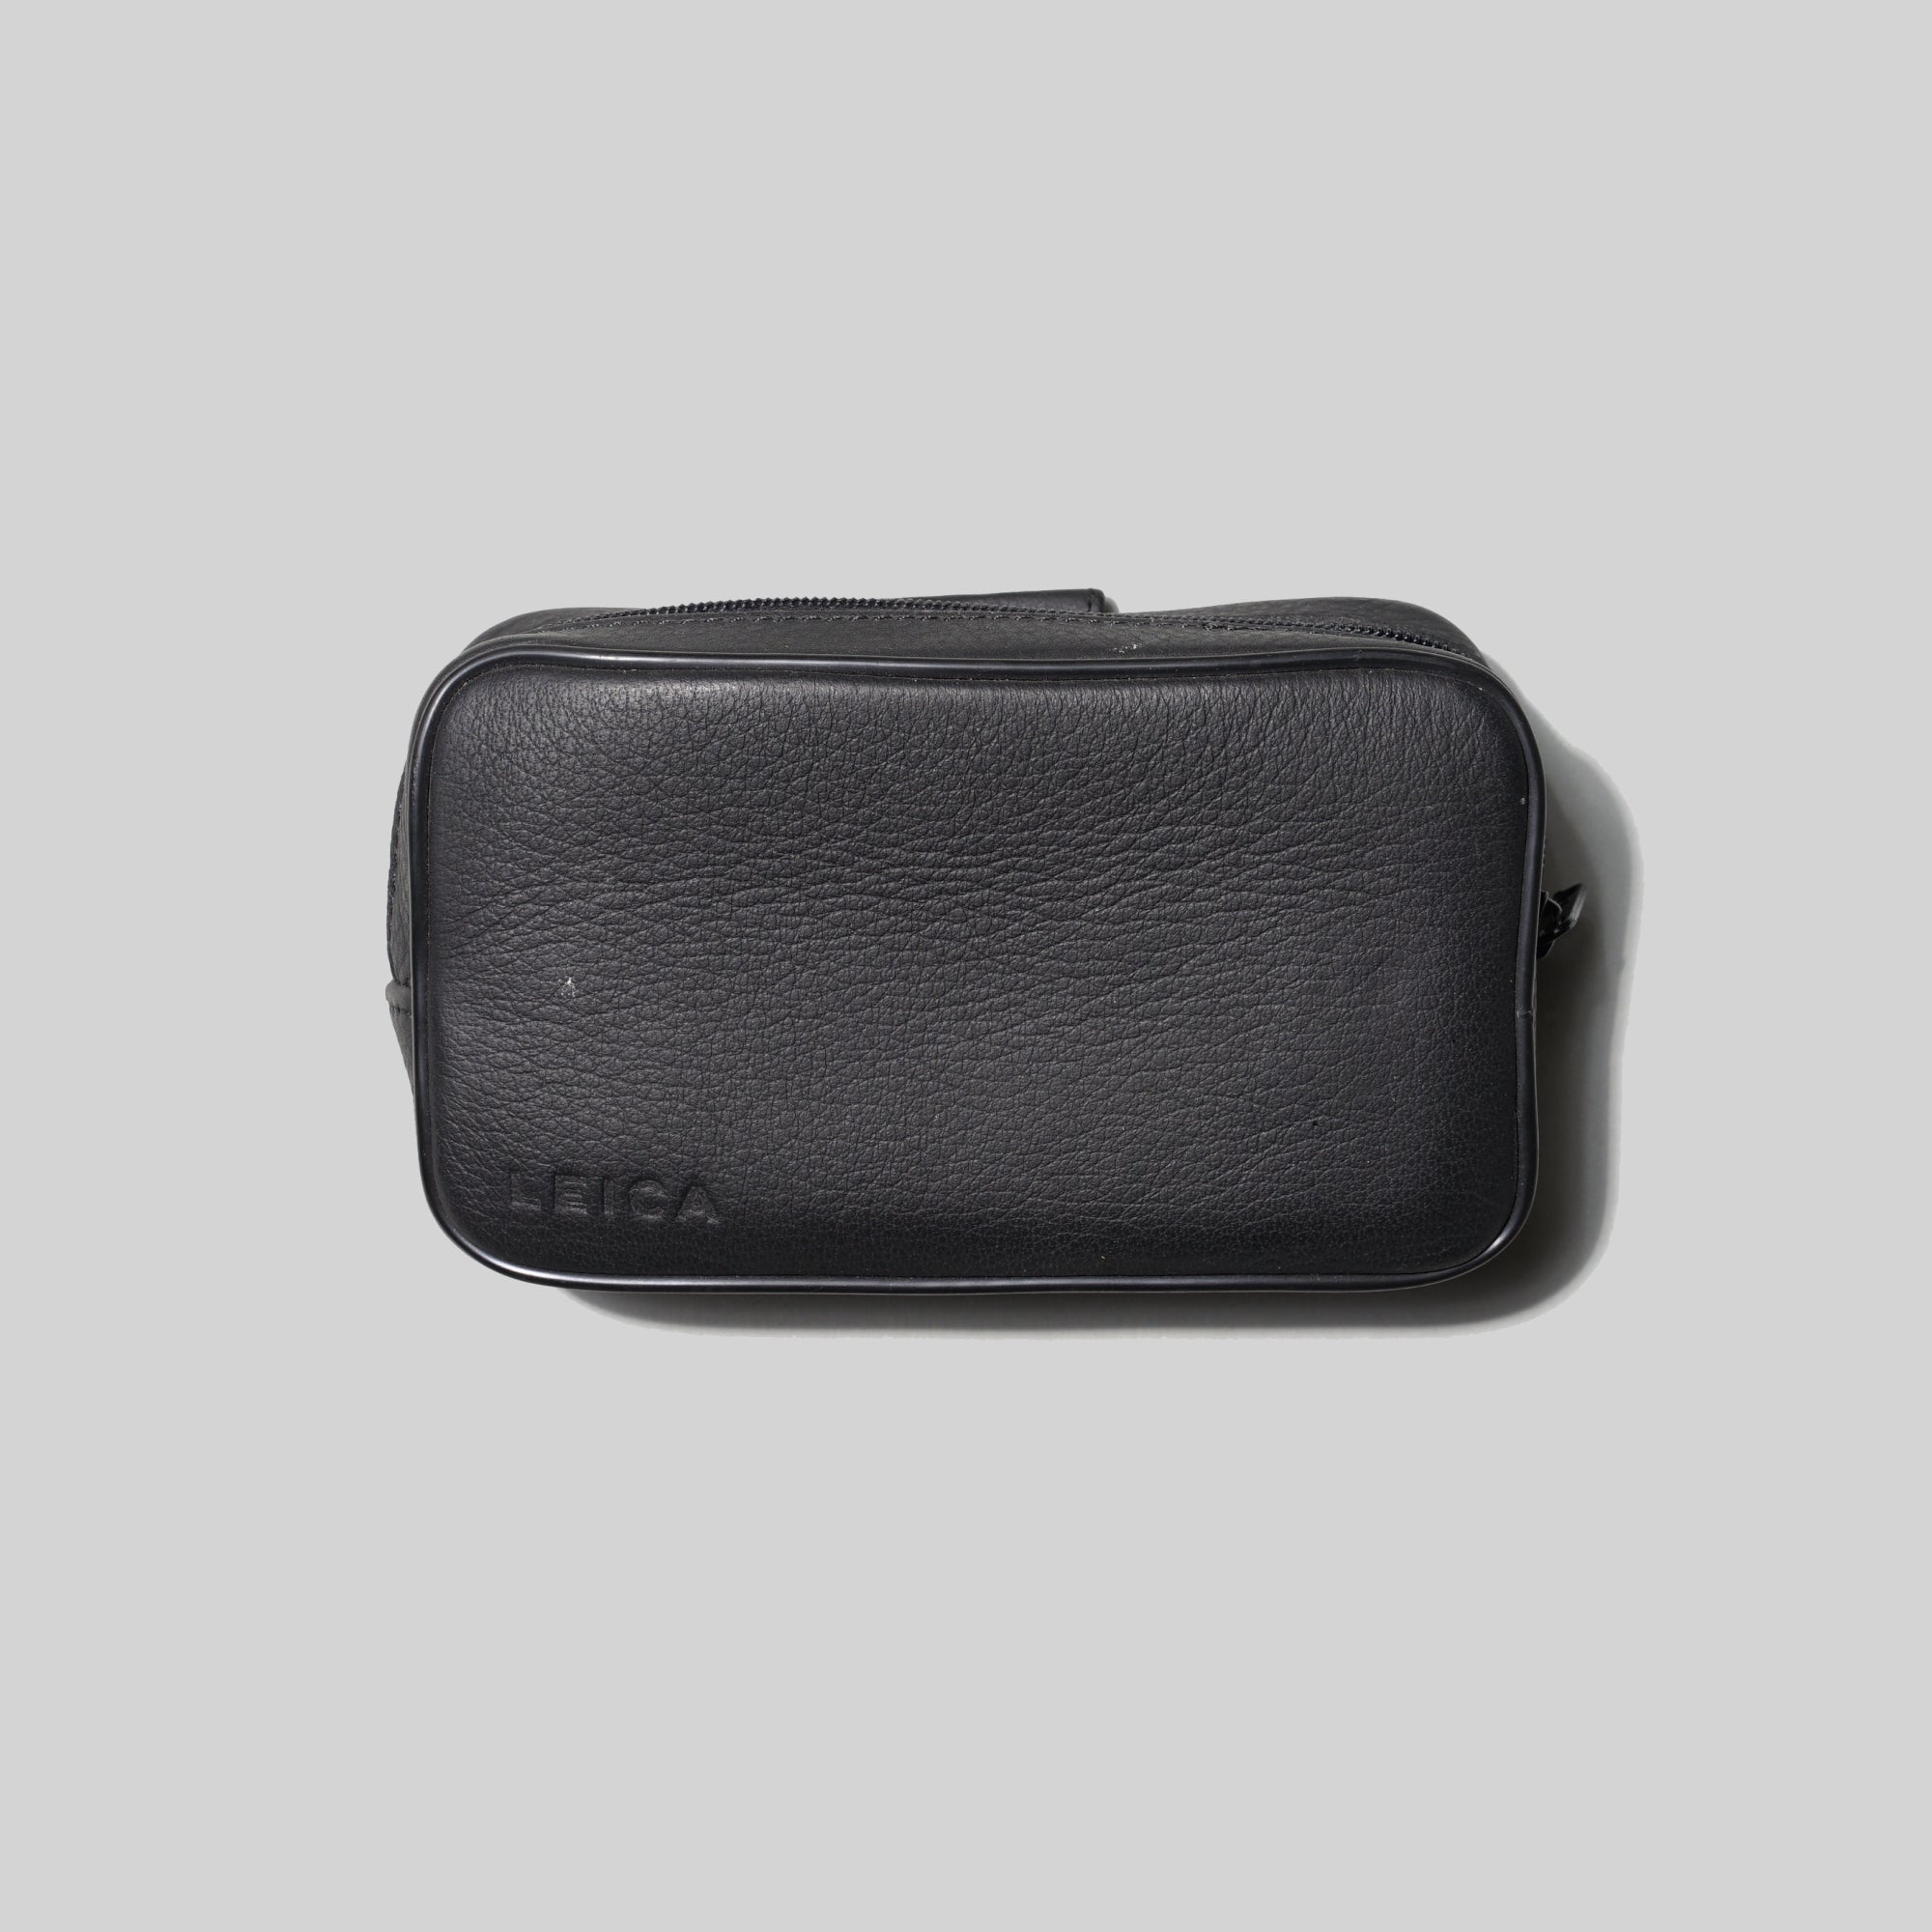 Buy Leica Bag now at Analogue Amsterdam